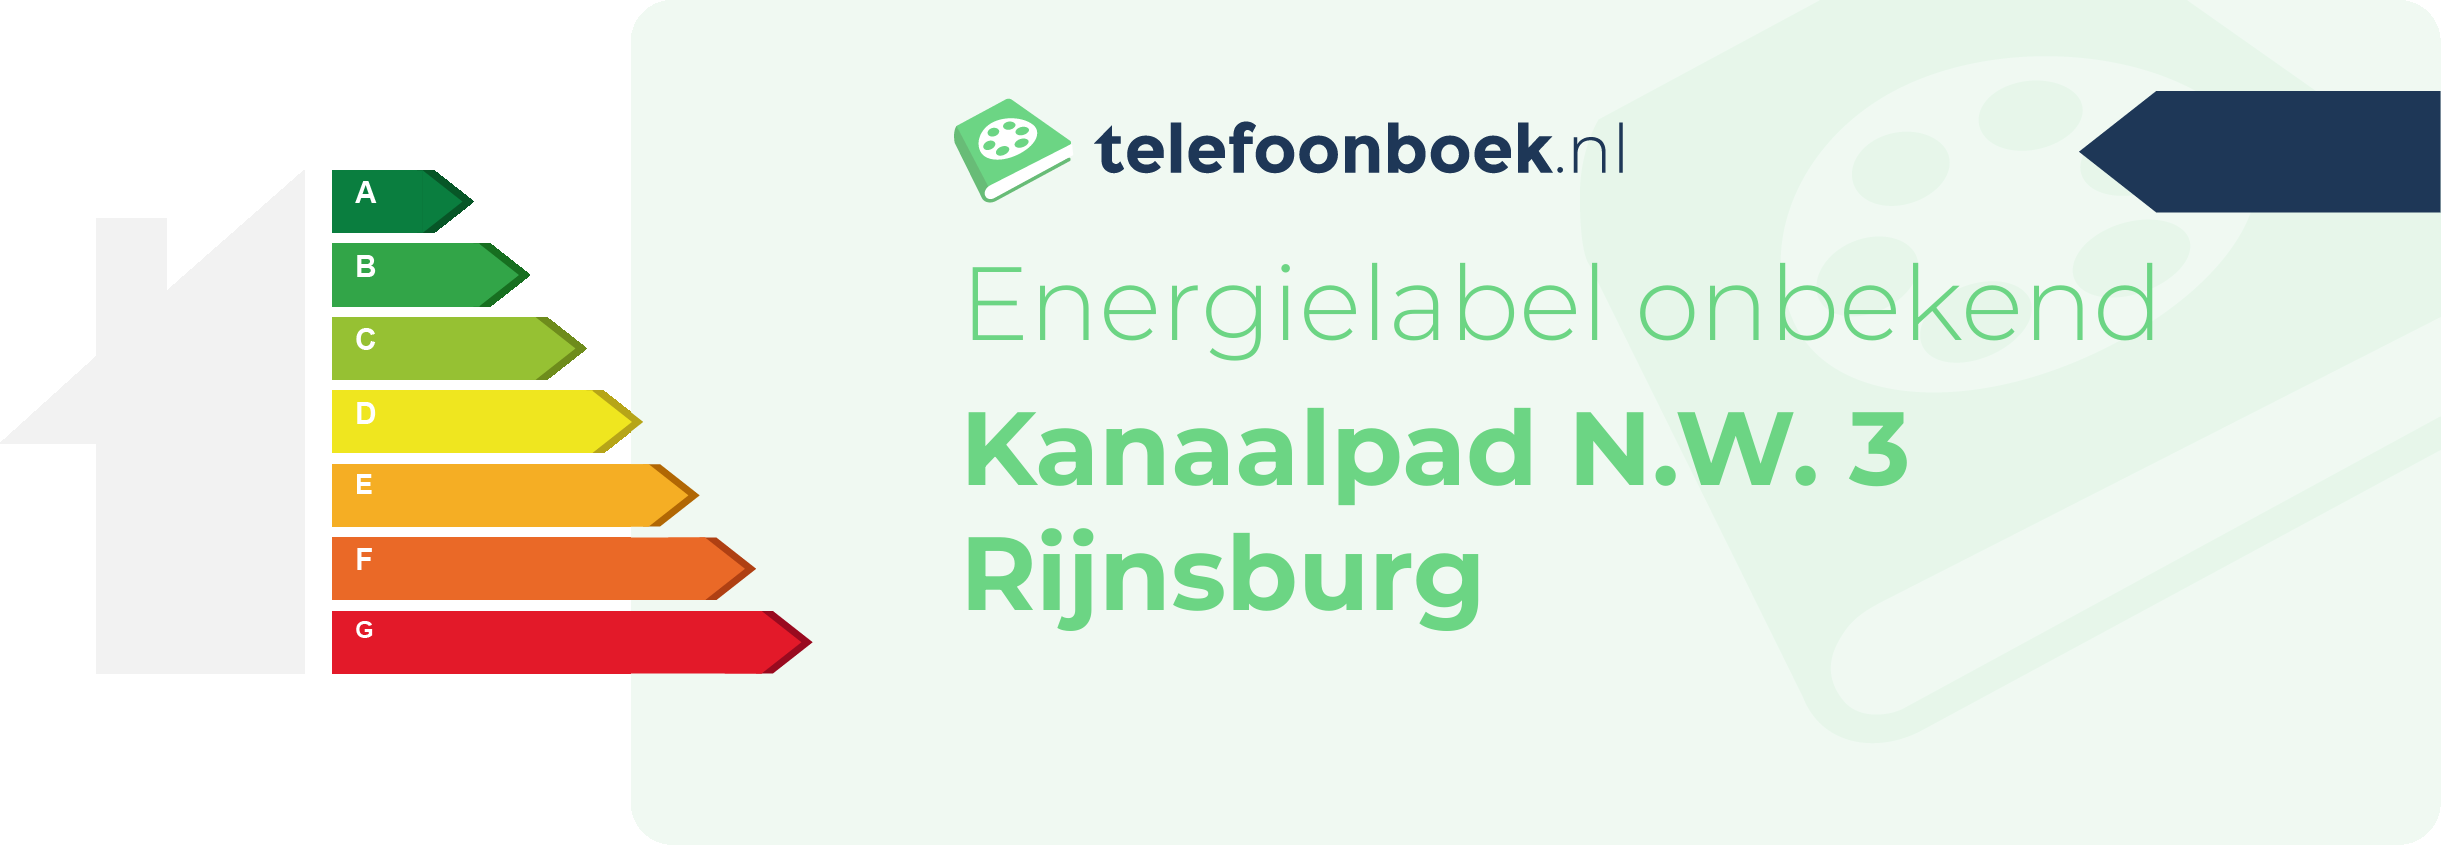 Energielabel Kanaalpad N.W. 3 Rijnsburg